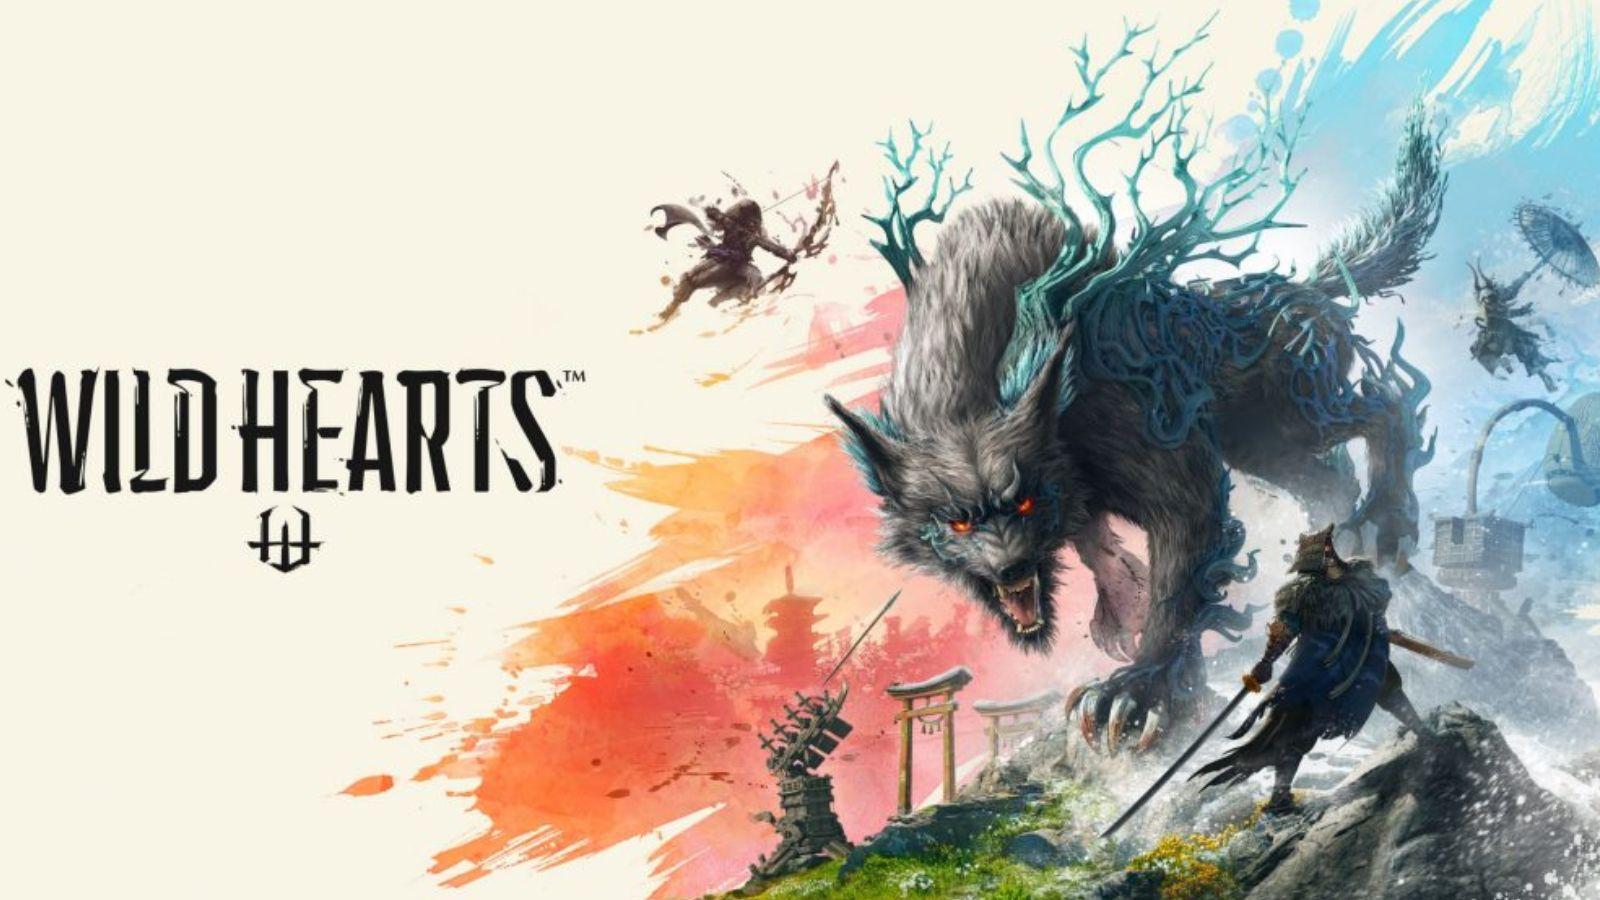 WILD HEARTS  Game Awards Trailer: The Mighty Kemono 